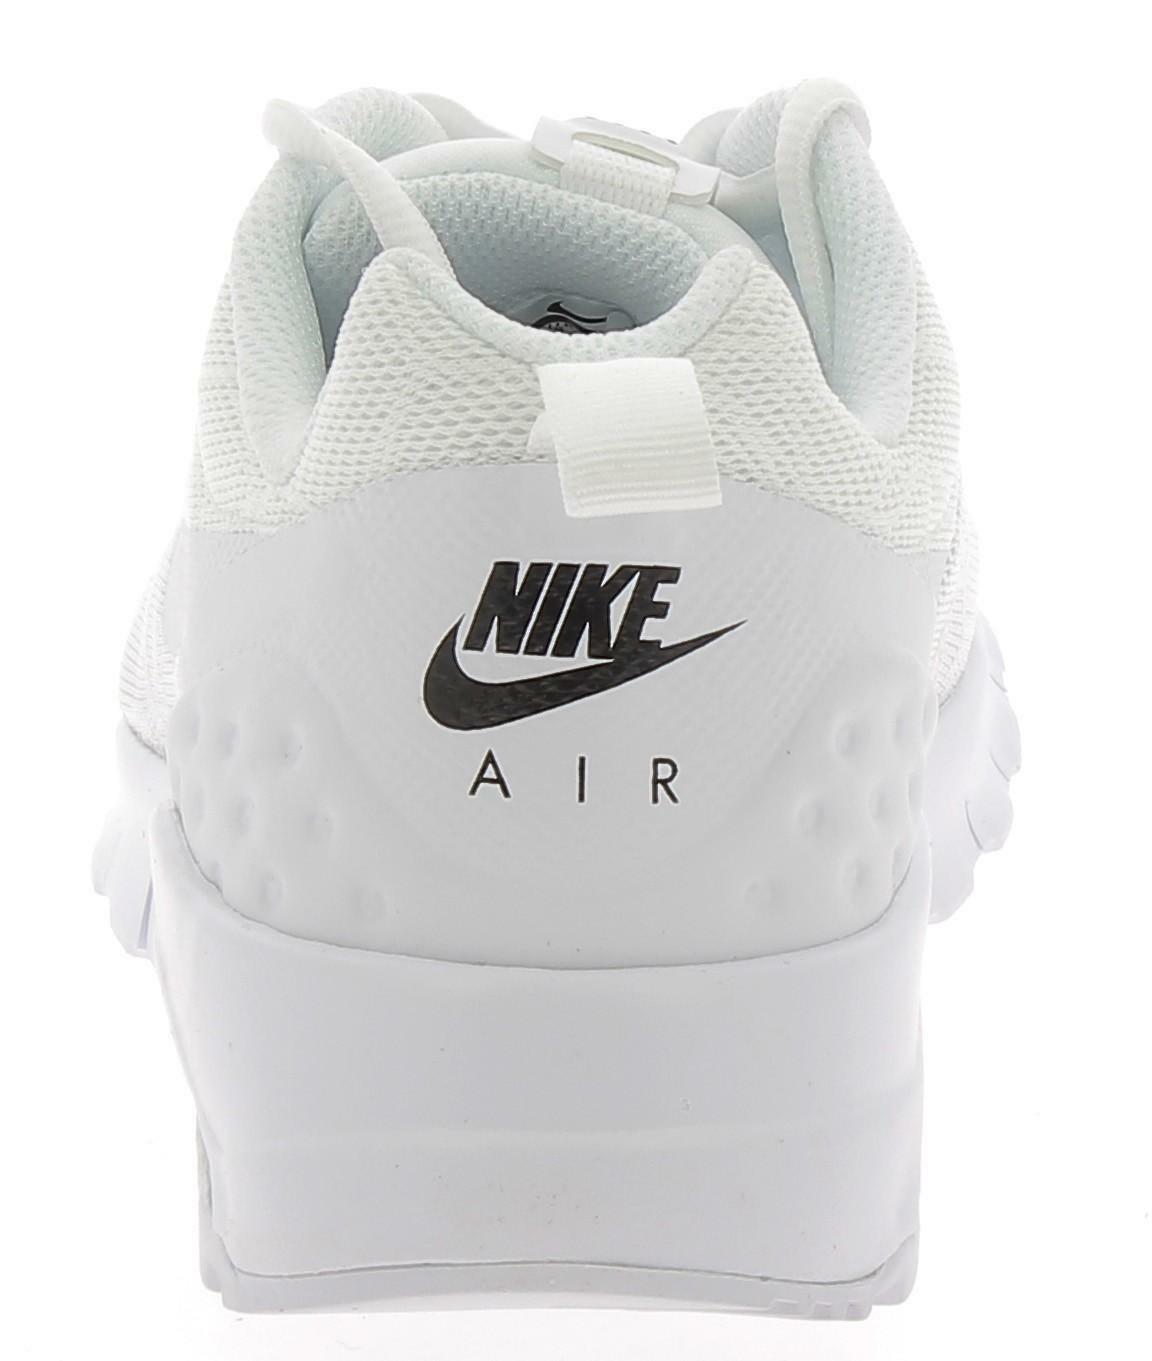 Nike air max motion lw se scarpe sportive donna bianche 844895101